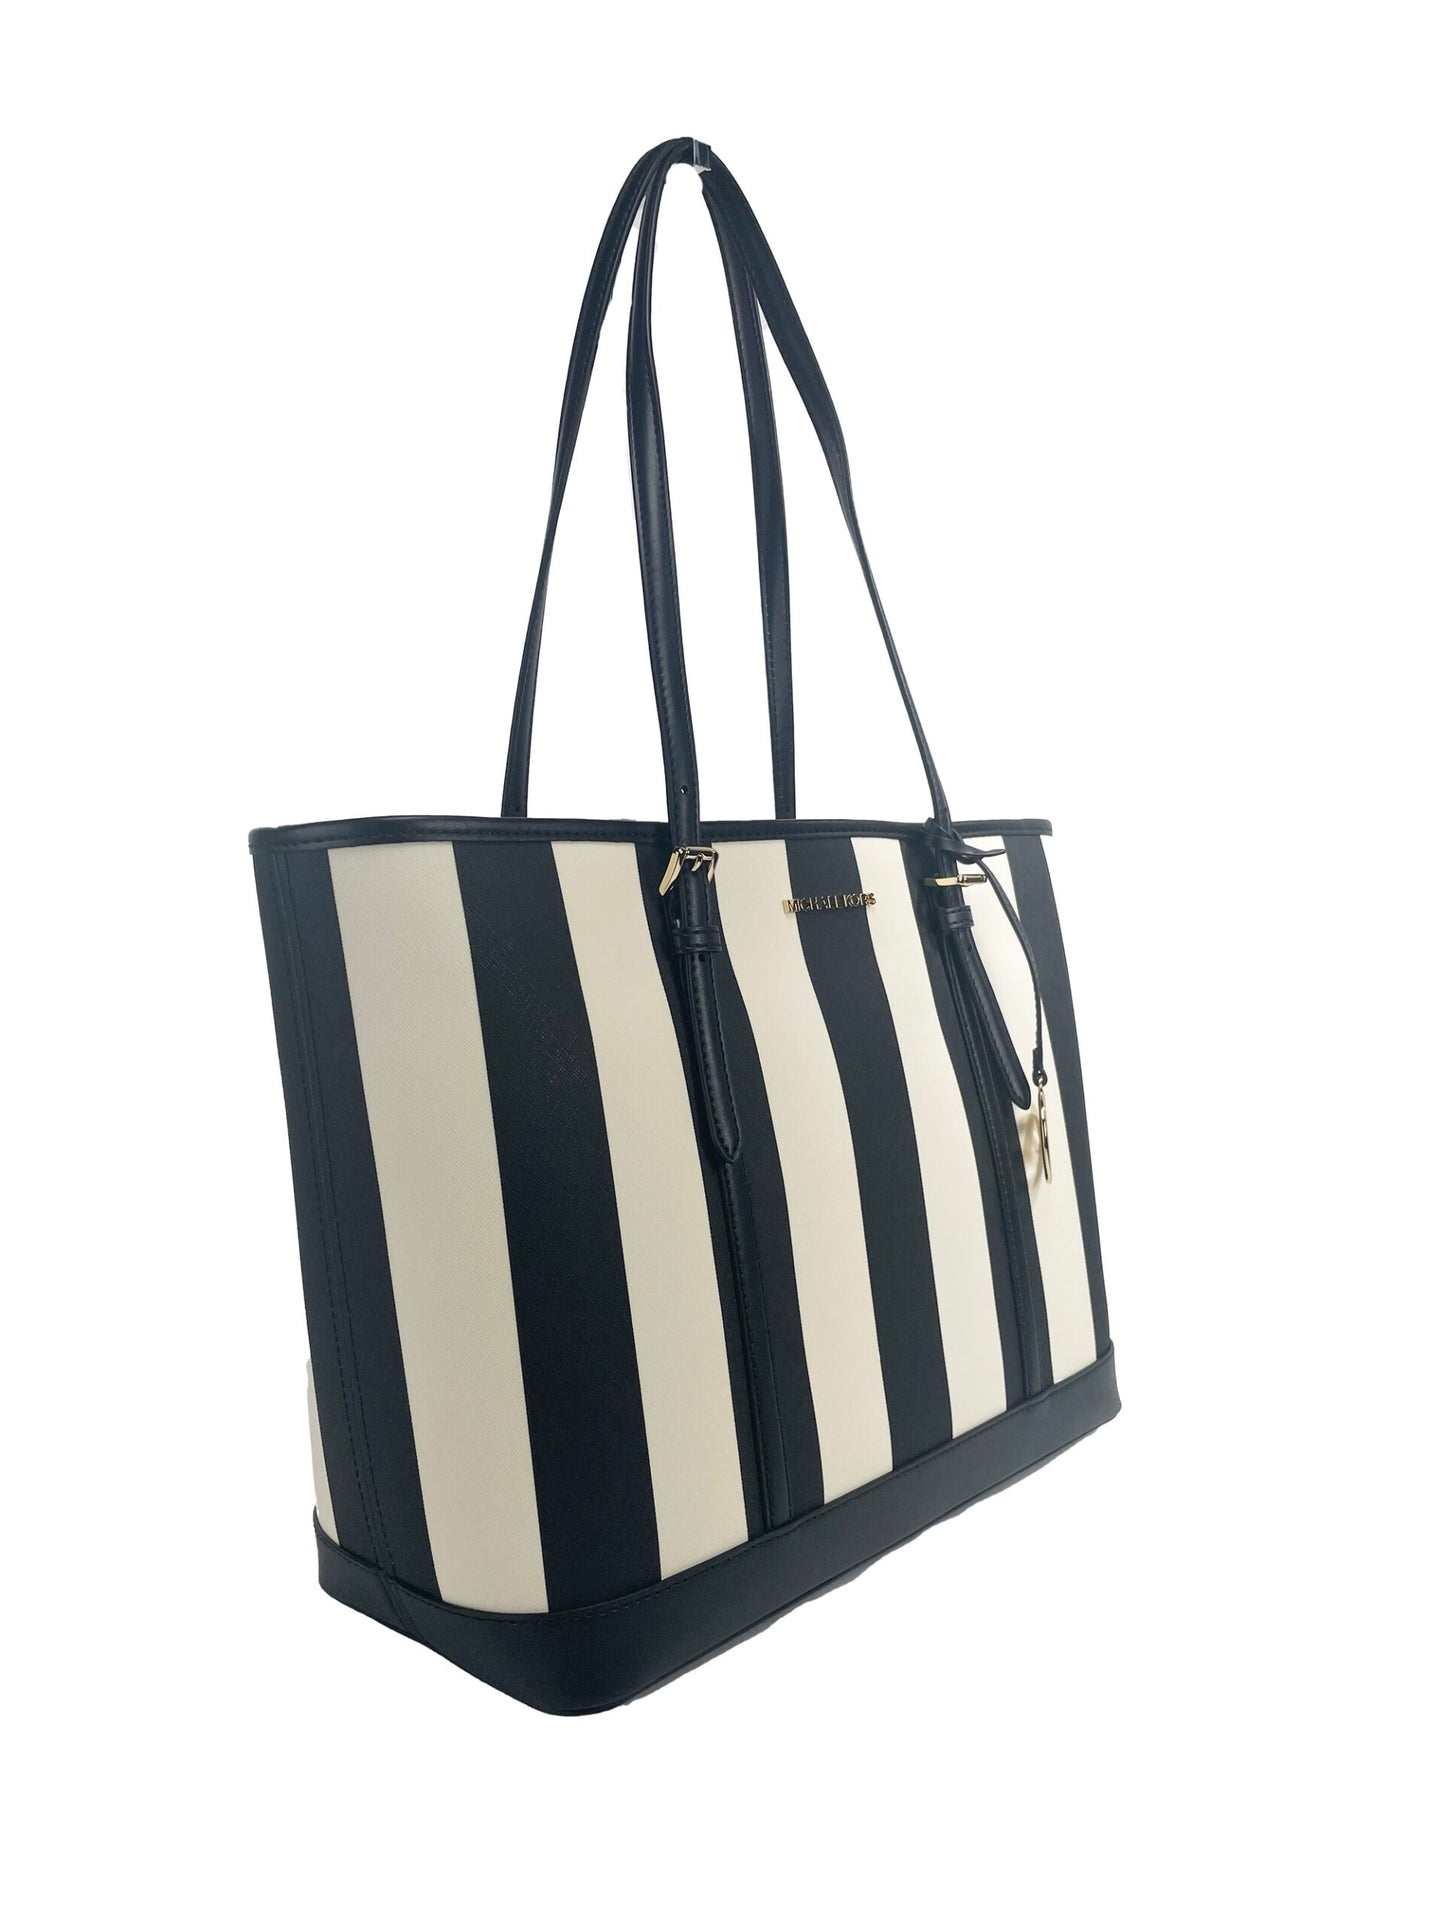 Michael Kors Jet Set Travel TZ Shoulder Tote Handbag (Black Multi)